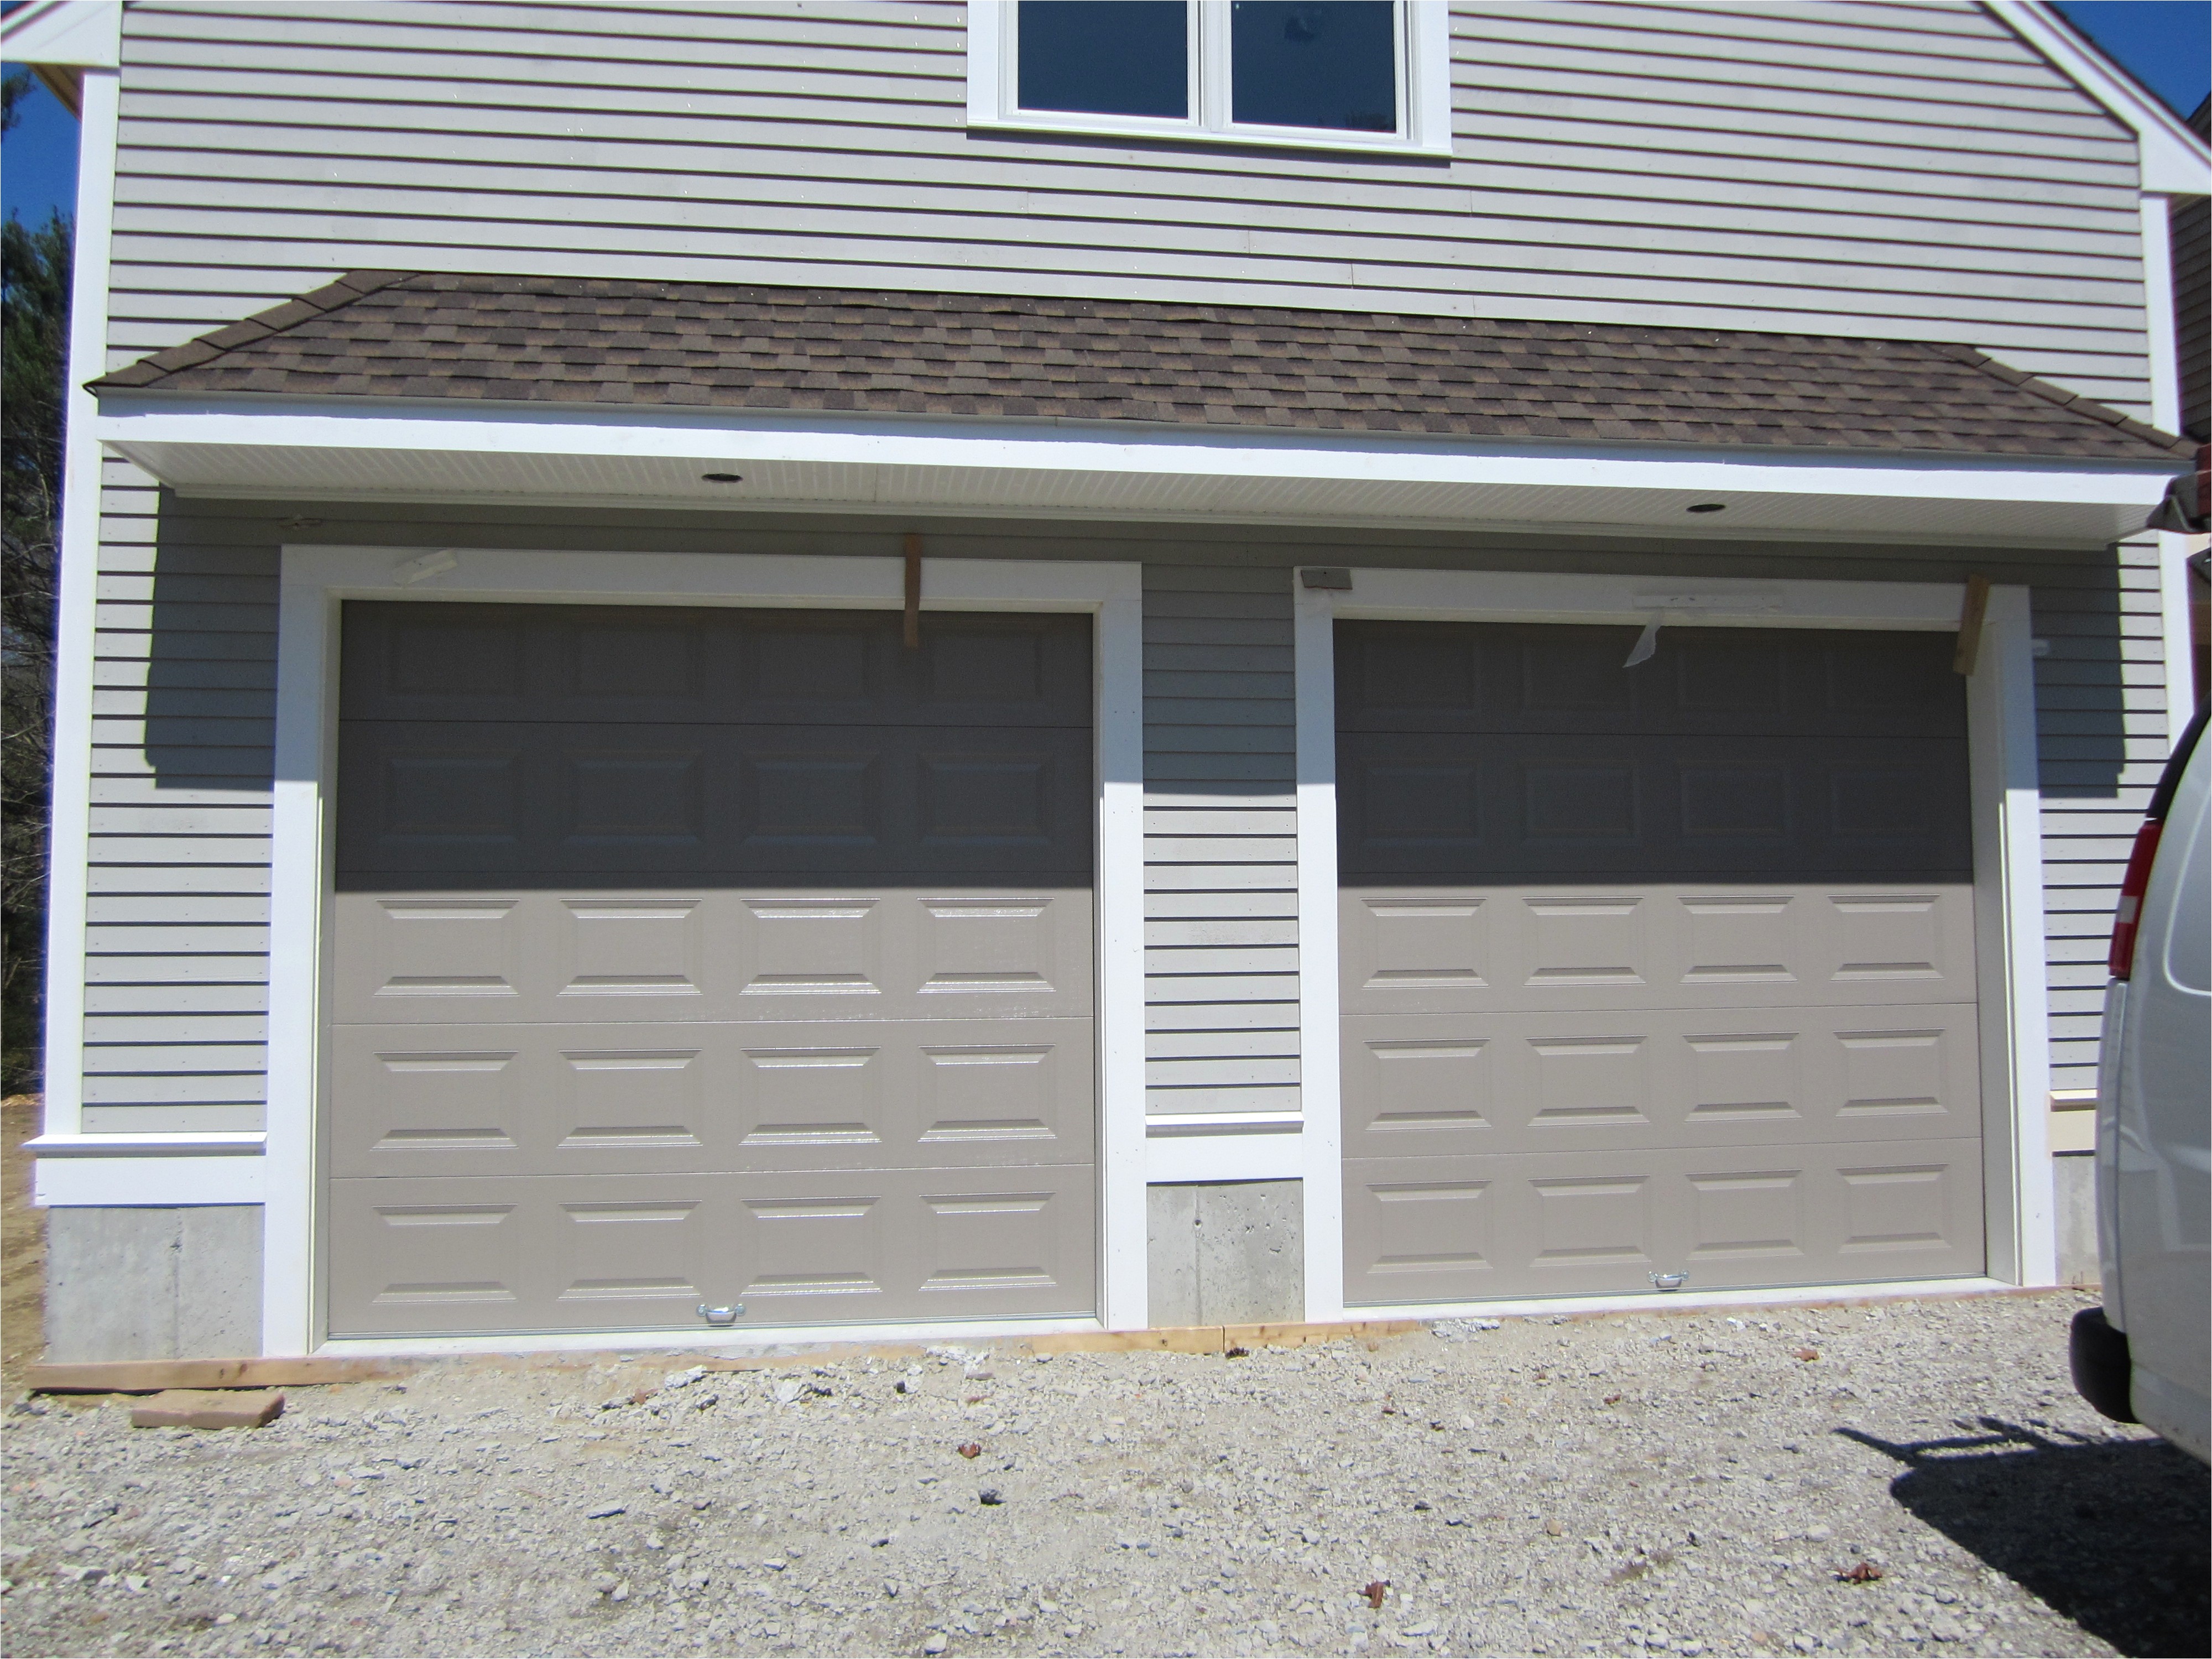 New Garage Door Panels Cost for Large Space